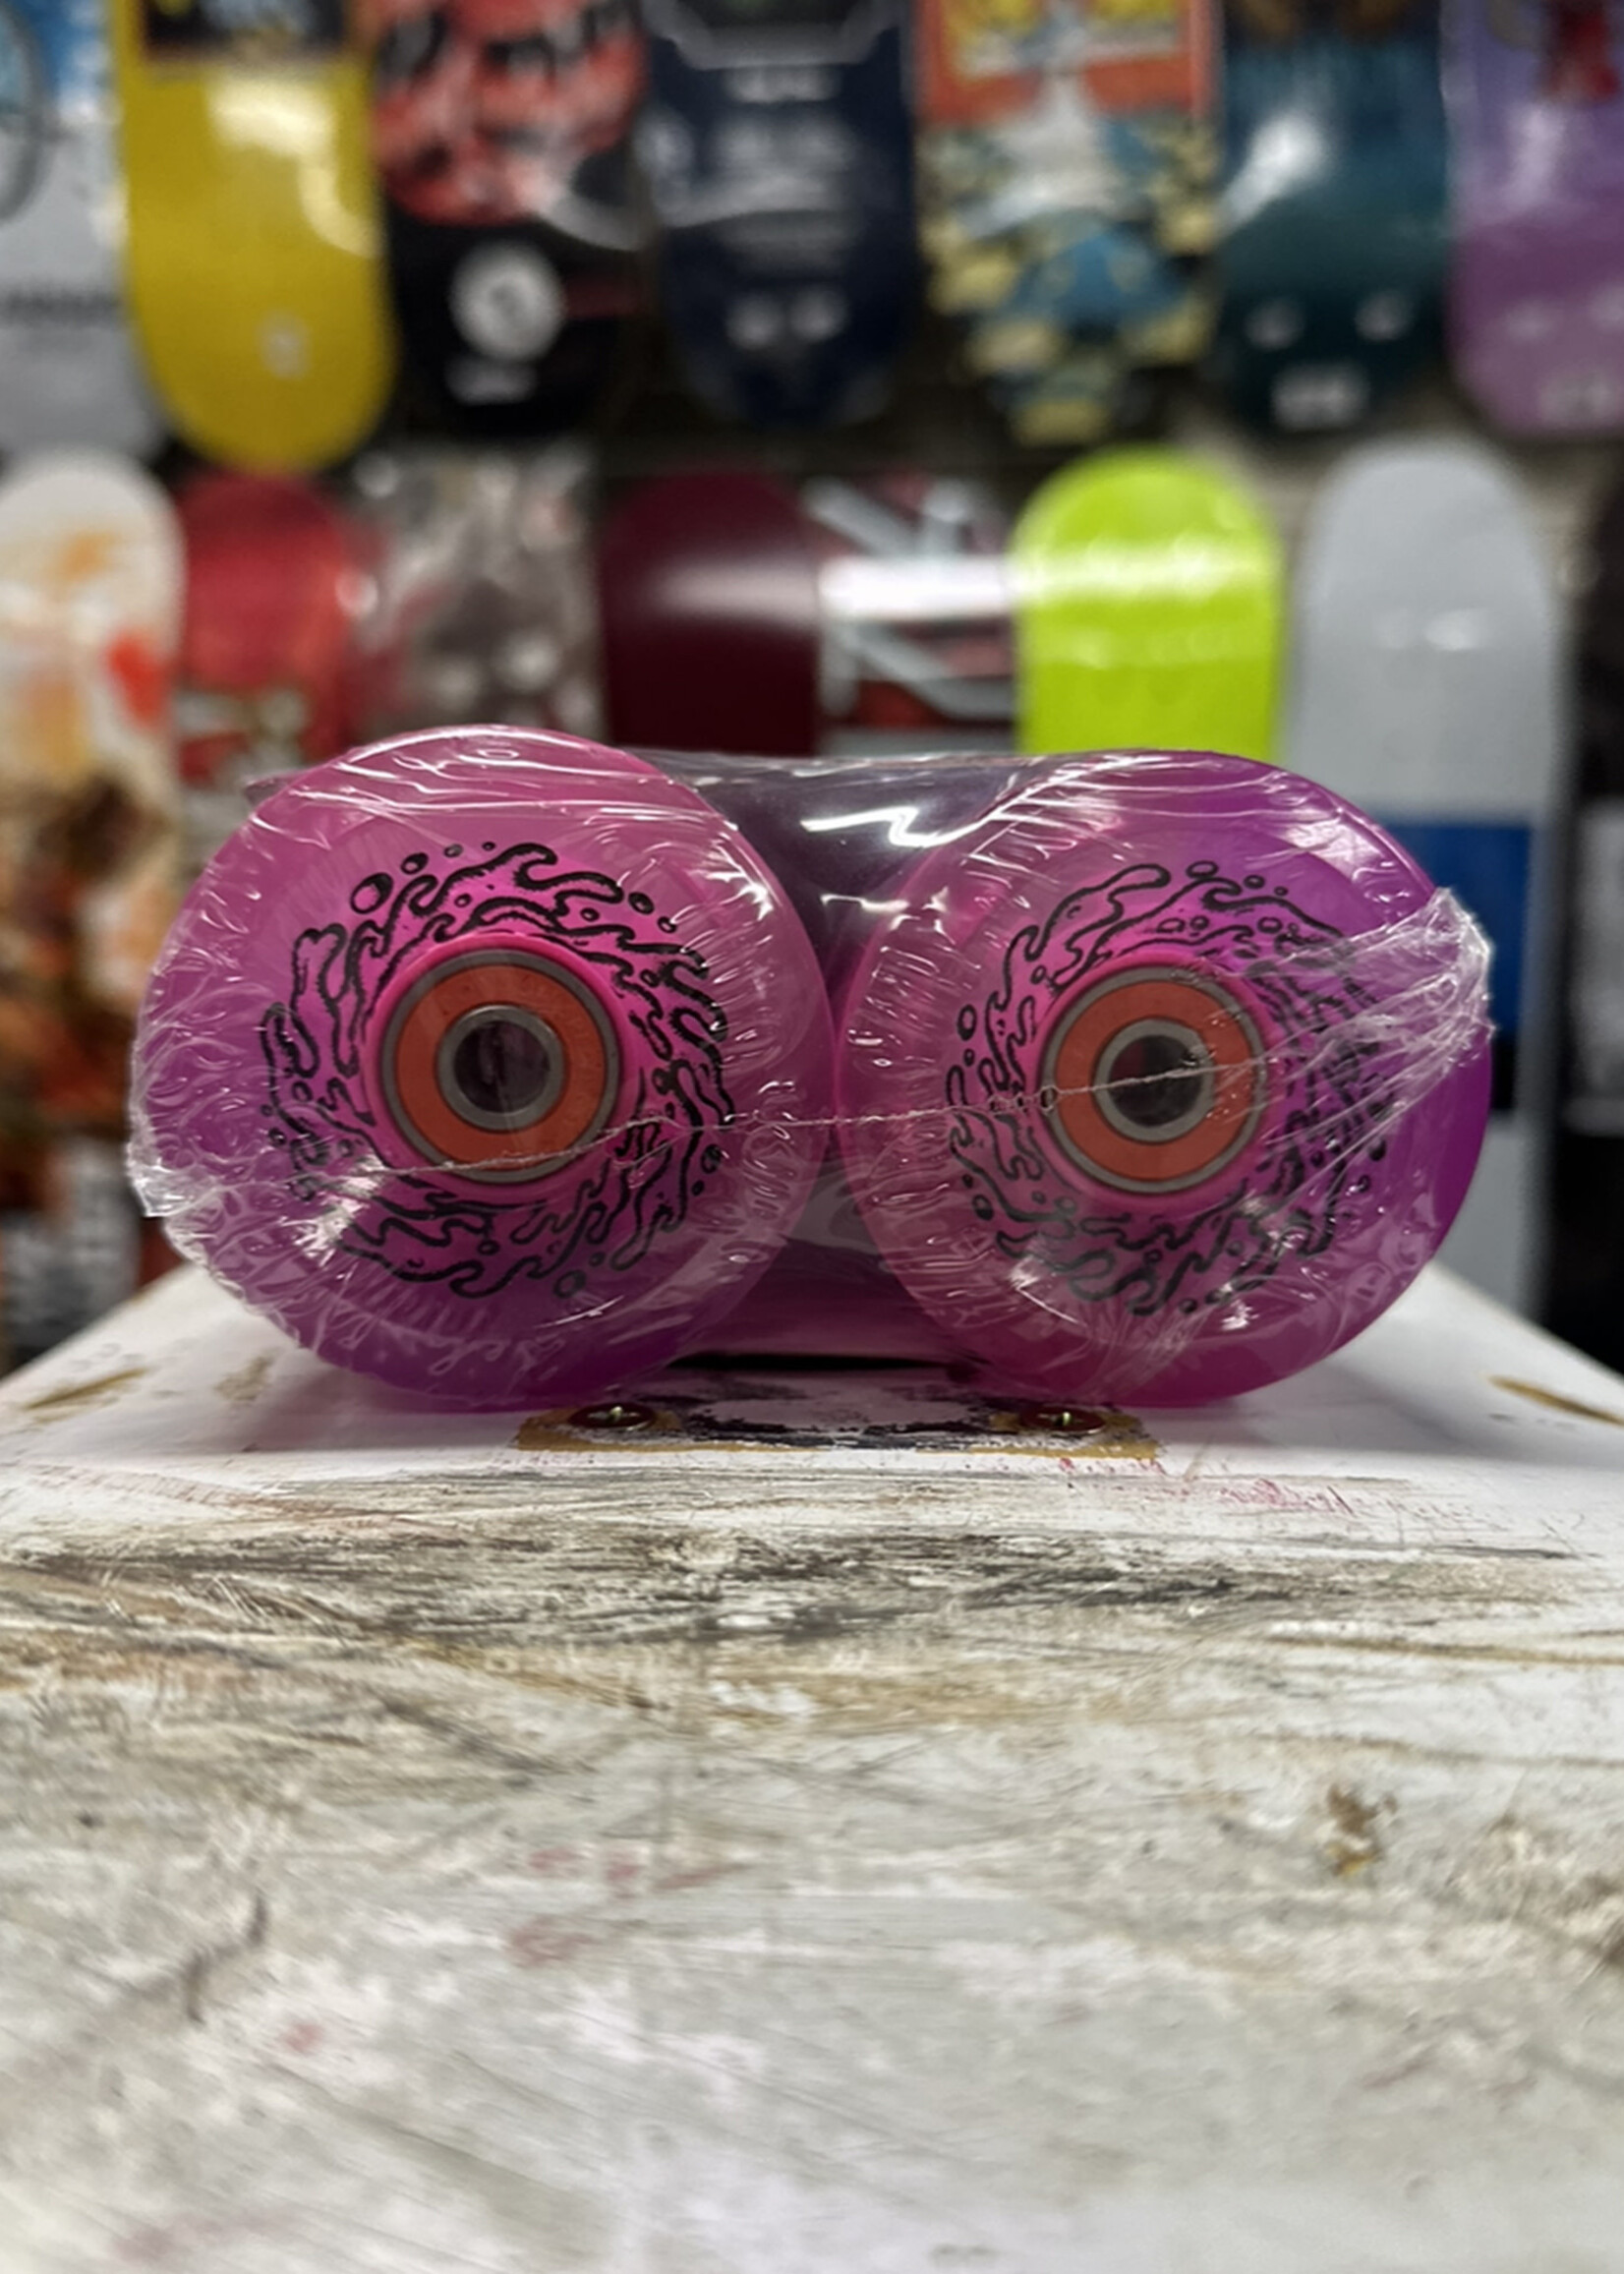 Slime Balls SLIME BALLS - Light Up's Pink Purple Fade LED - 78a 60mm